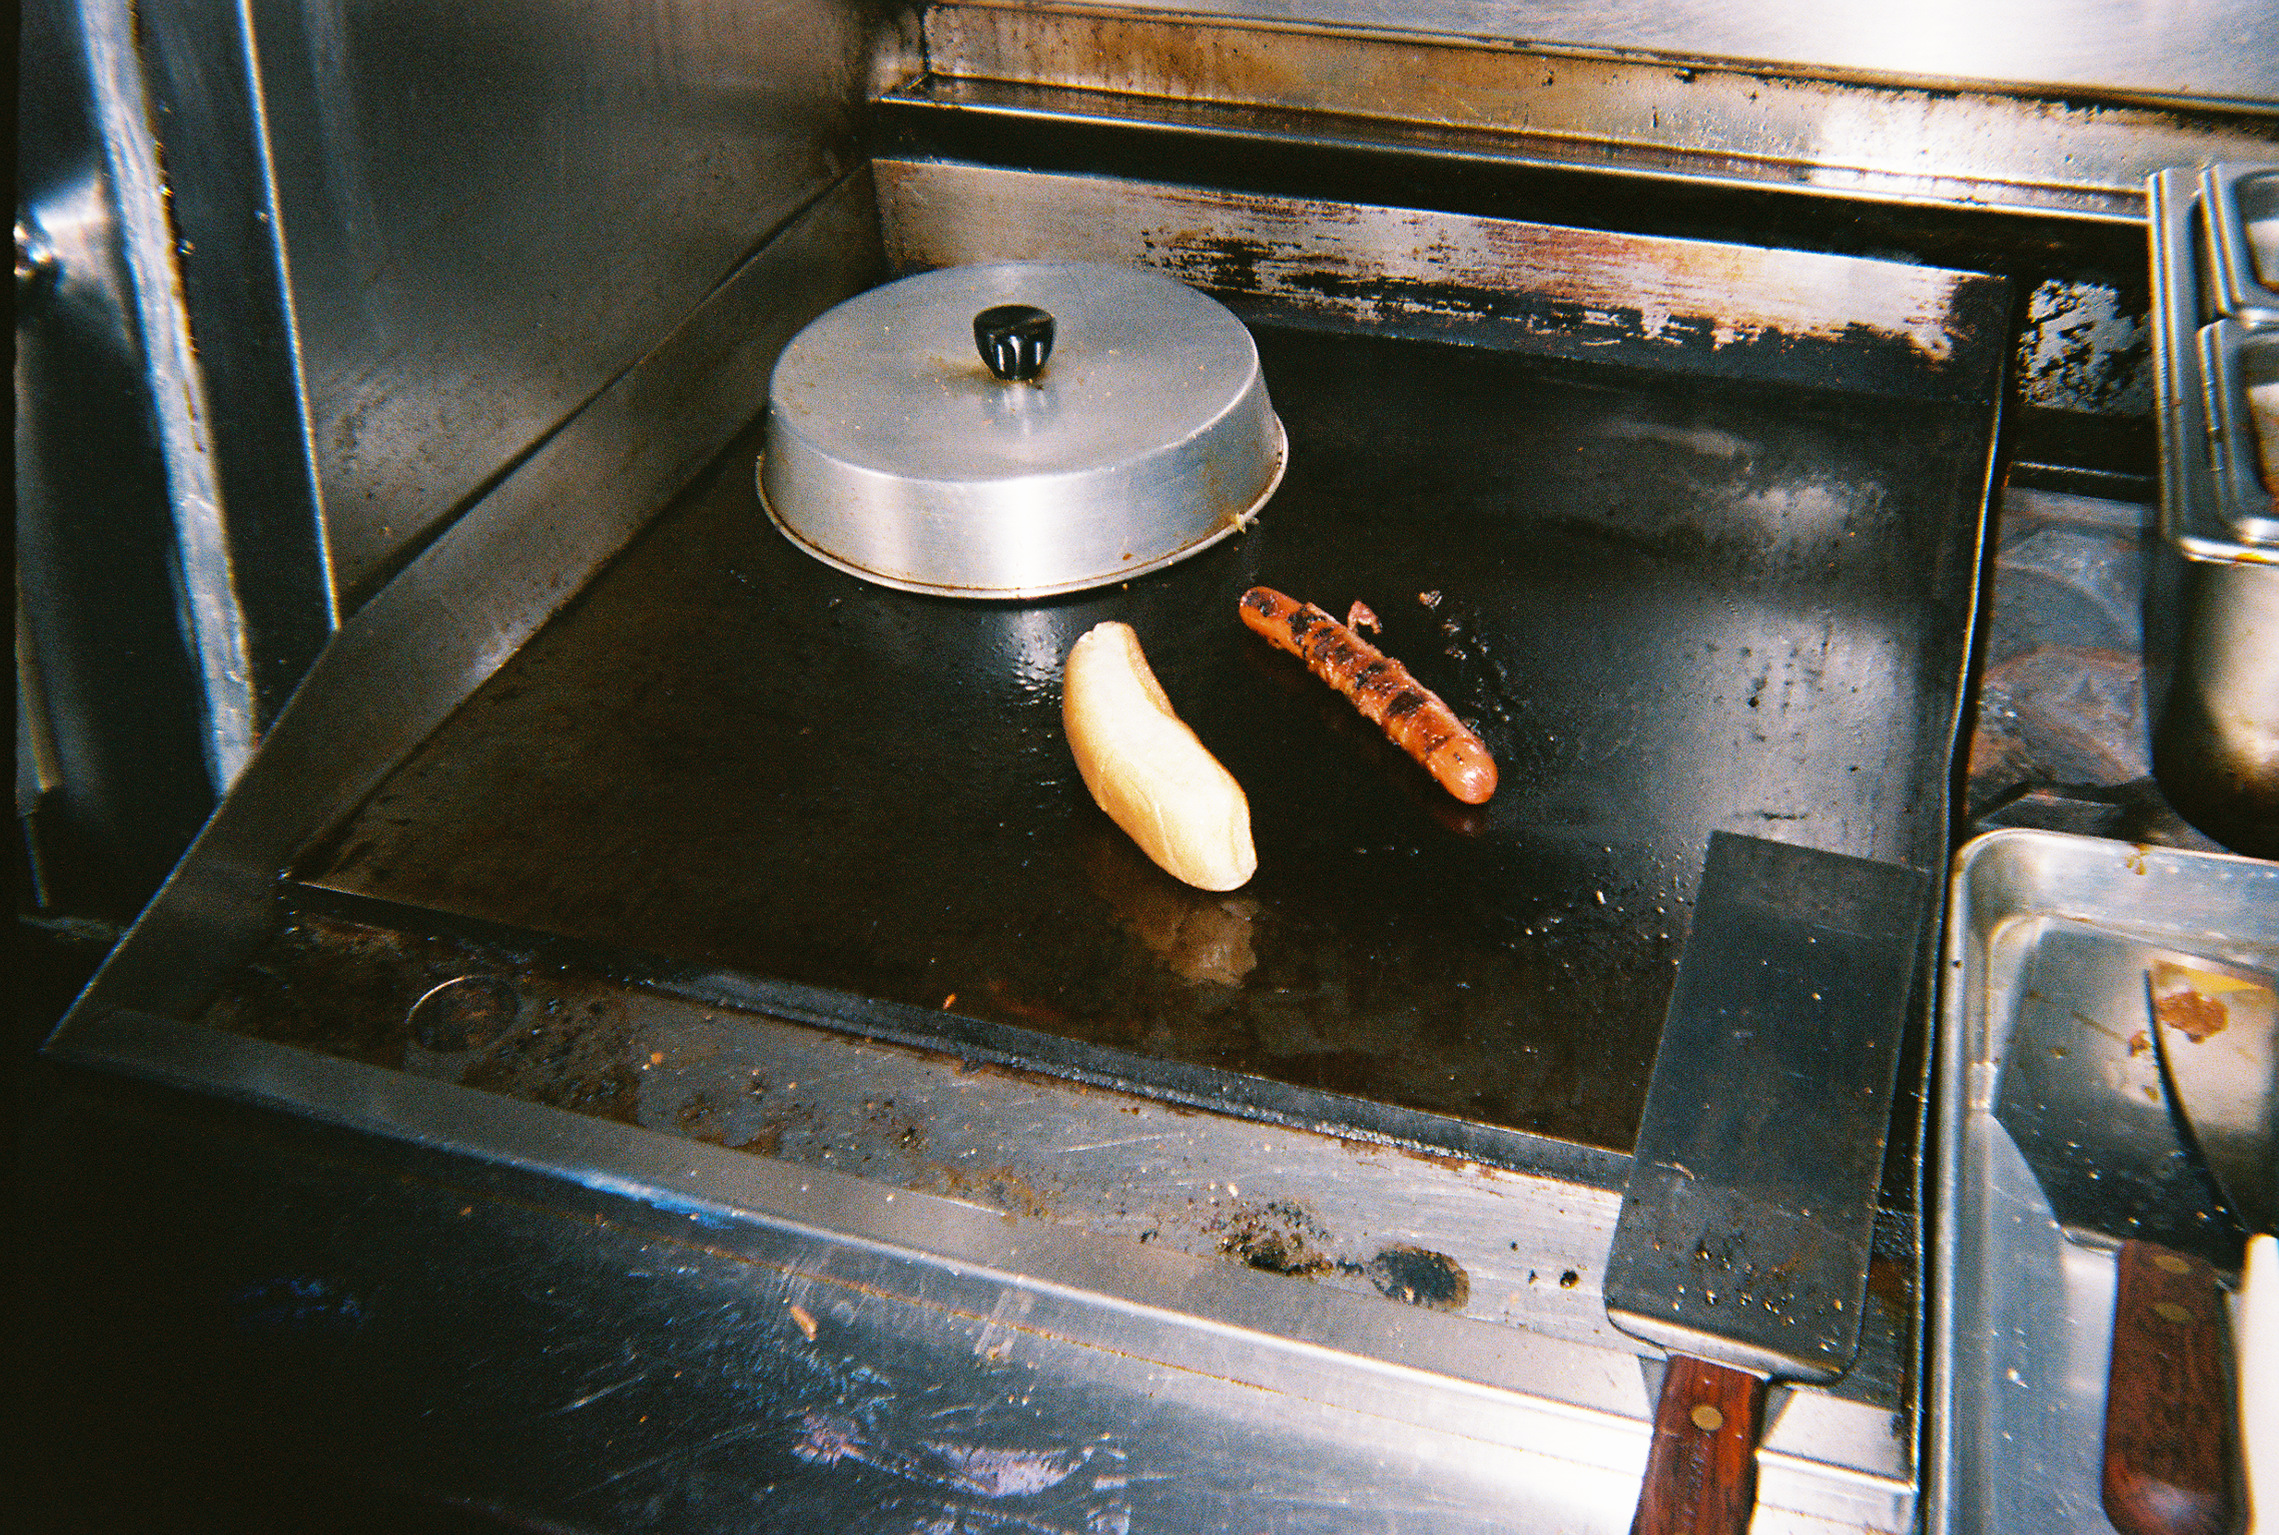 Hotdog on the grilltop